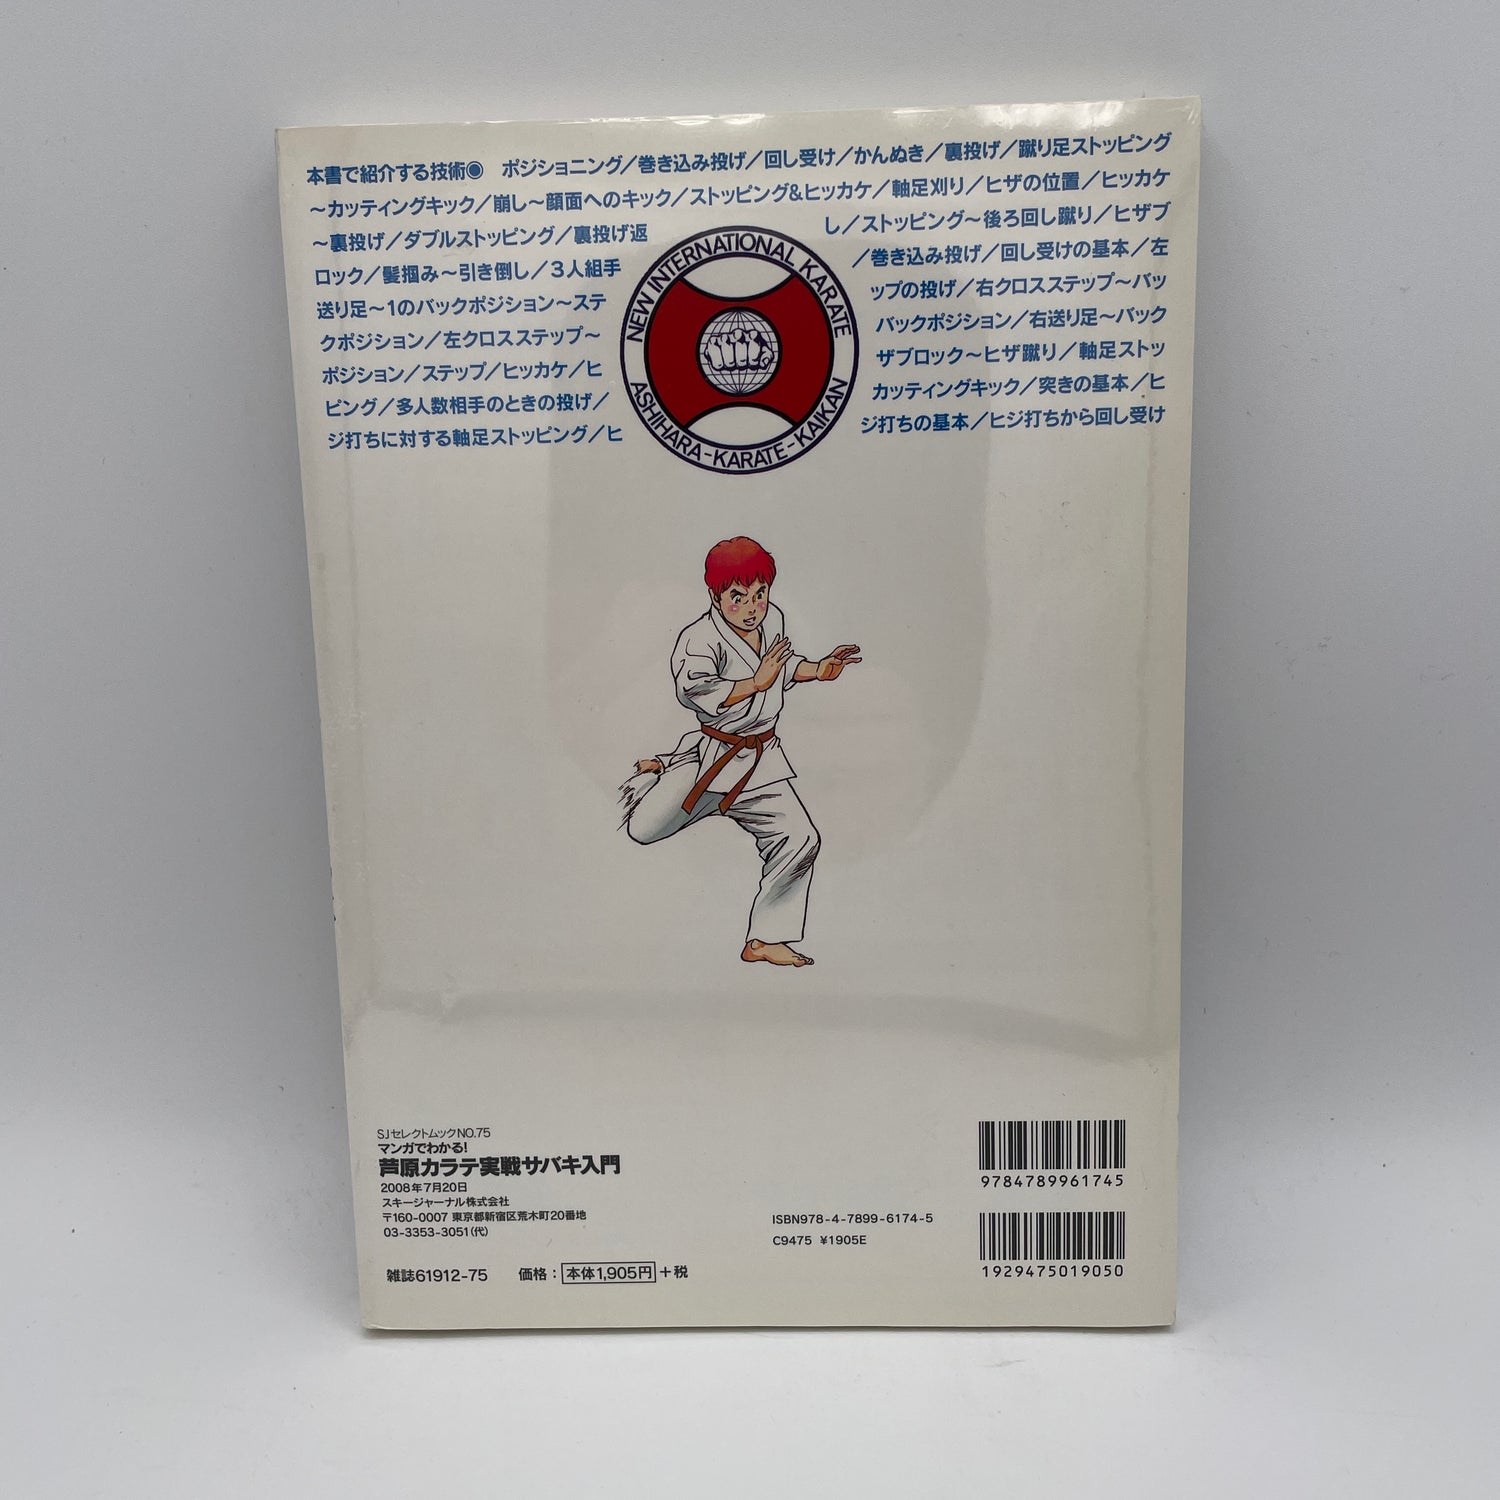 Ashihara Karate Intro to Sabaki Manga Book & DVD by Hideyuki Ashihara (Preowned)